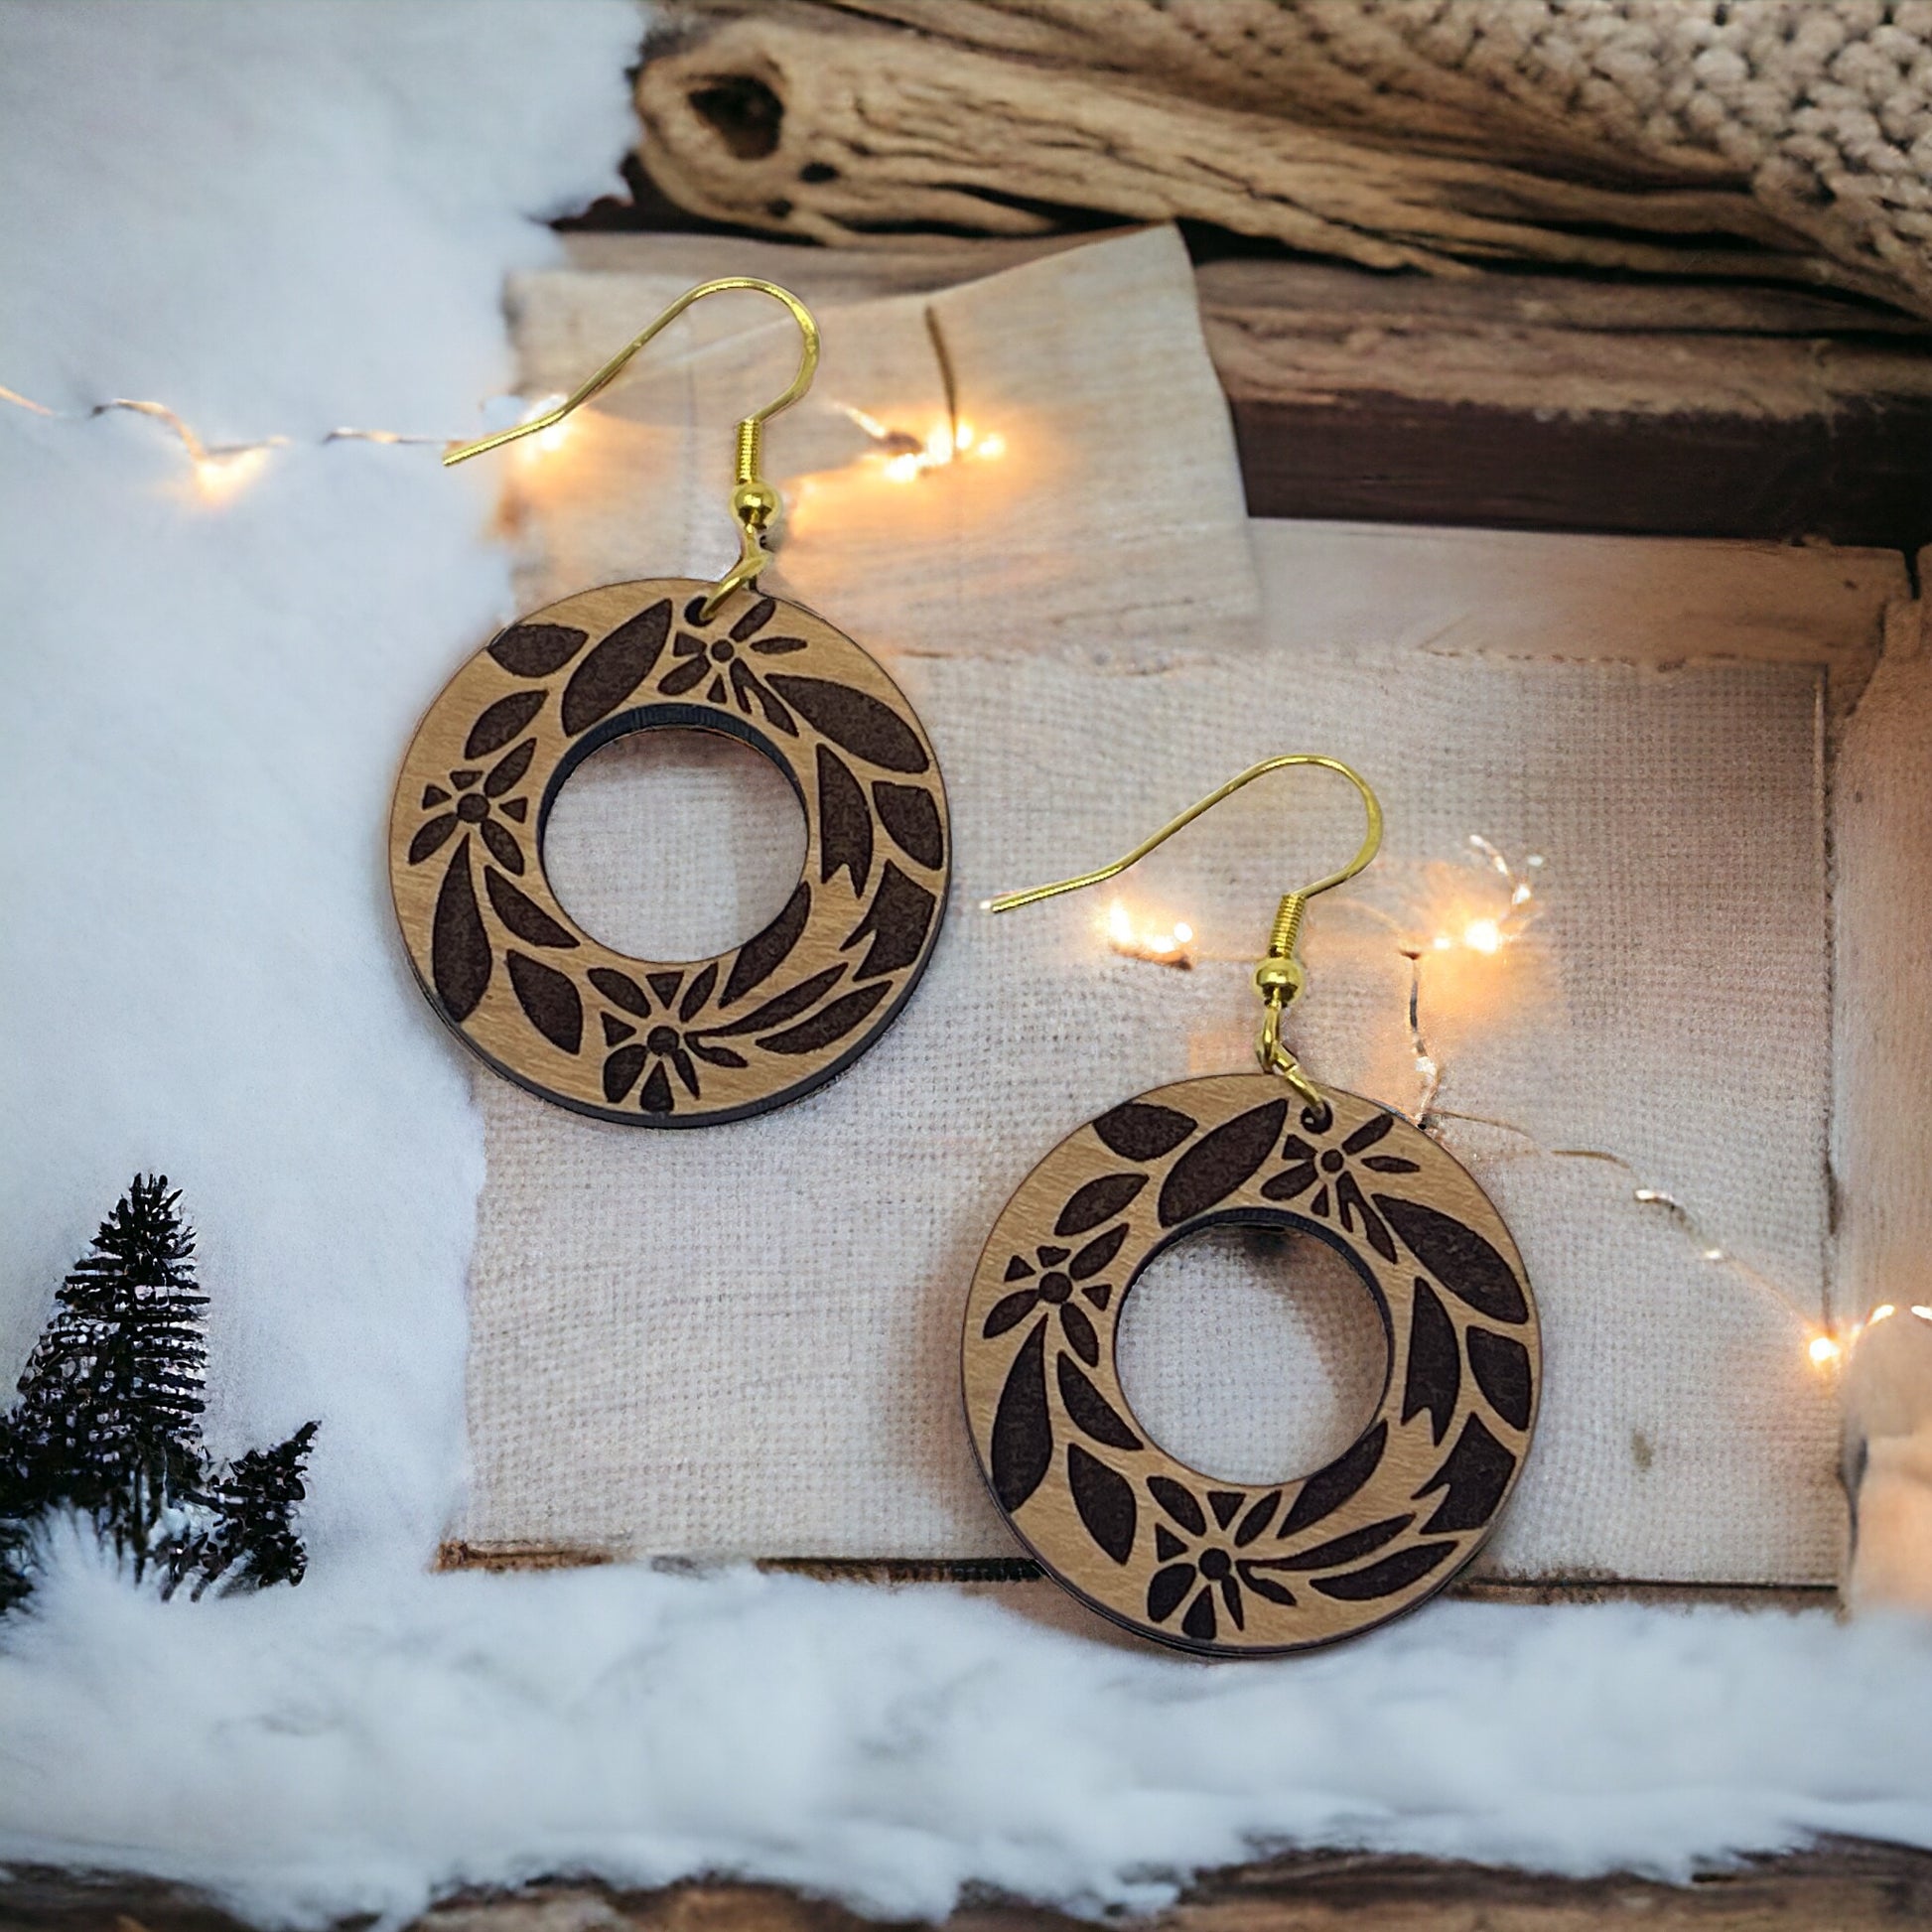 Holly Earrings, Christmas Mistletoe Dangle Earrings, Cute Holiday Earrings, Wood Plant Earring, Country Xmas Jewelry, Rustic Nature Gift Set